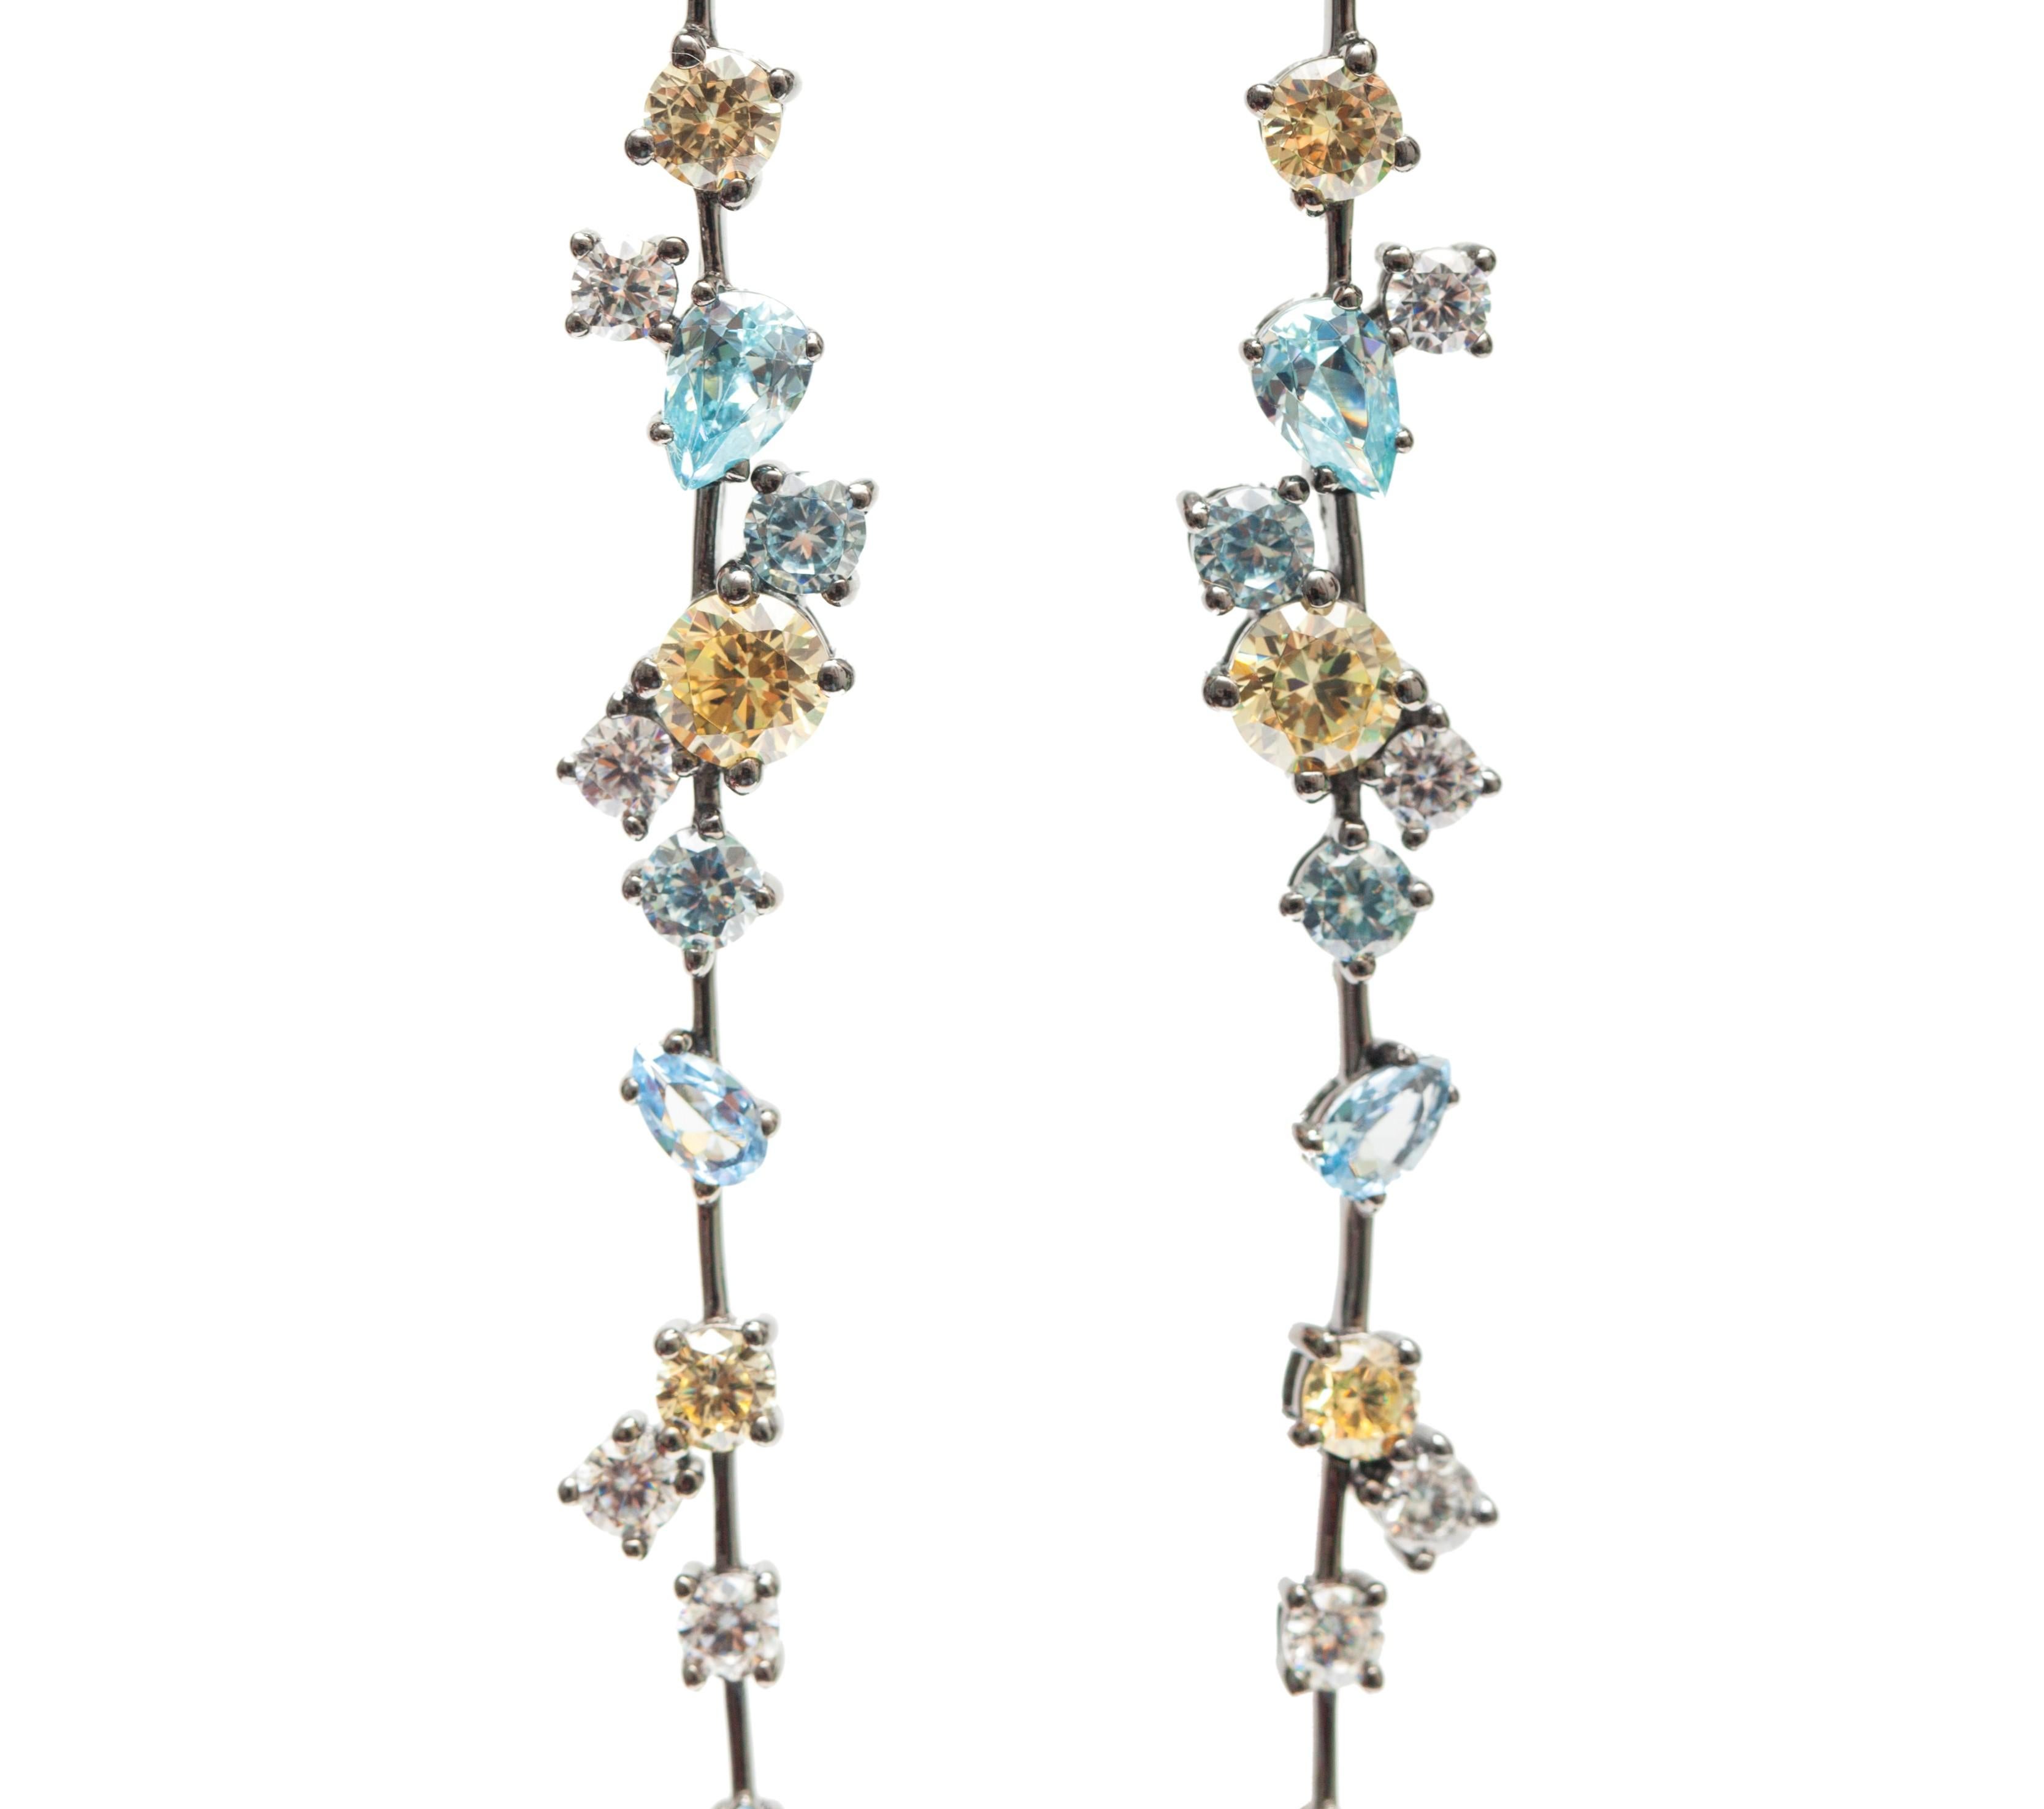 Contemporary Ammanii Gemstones Pastel Colors Long Strand Earrings